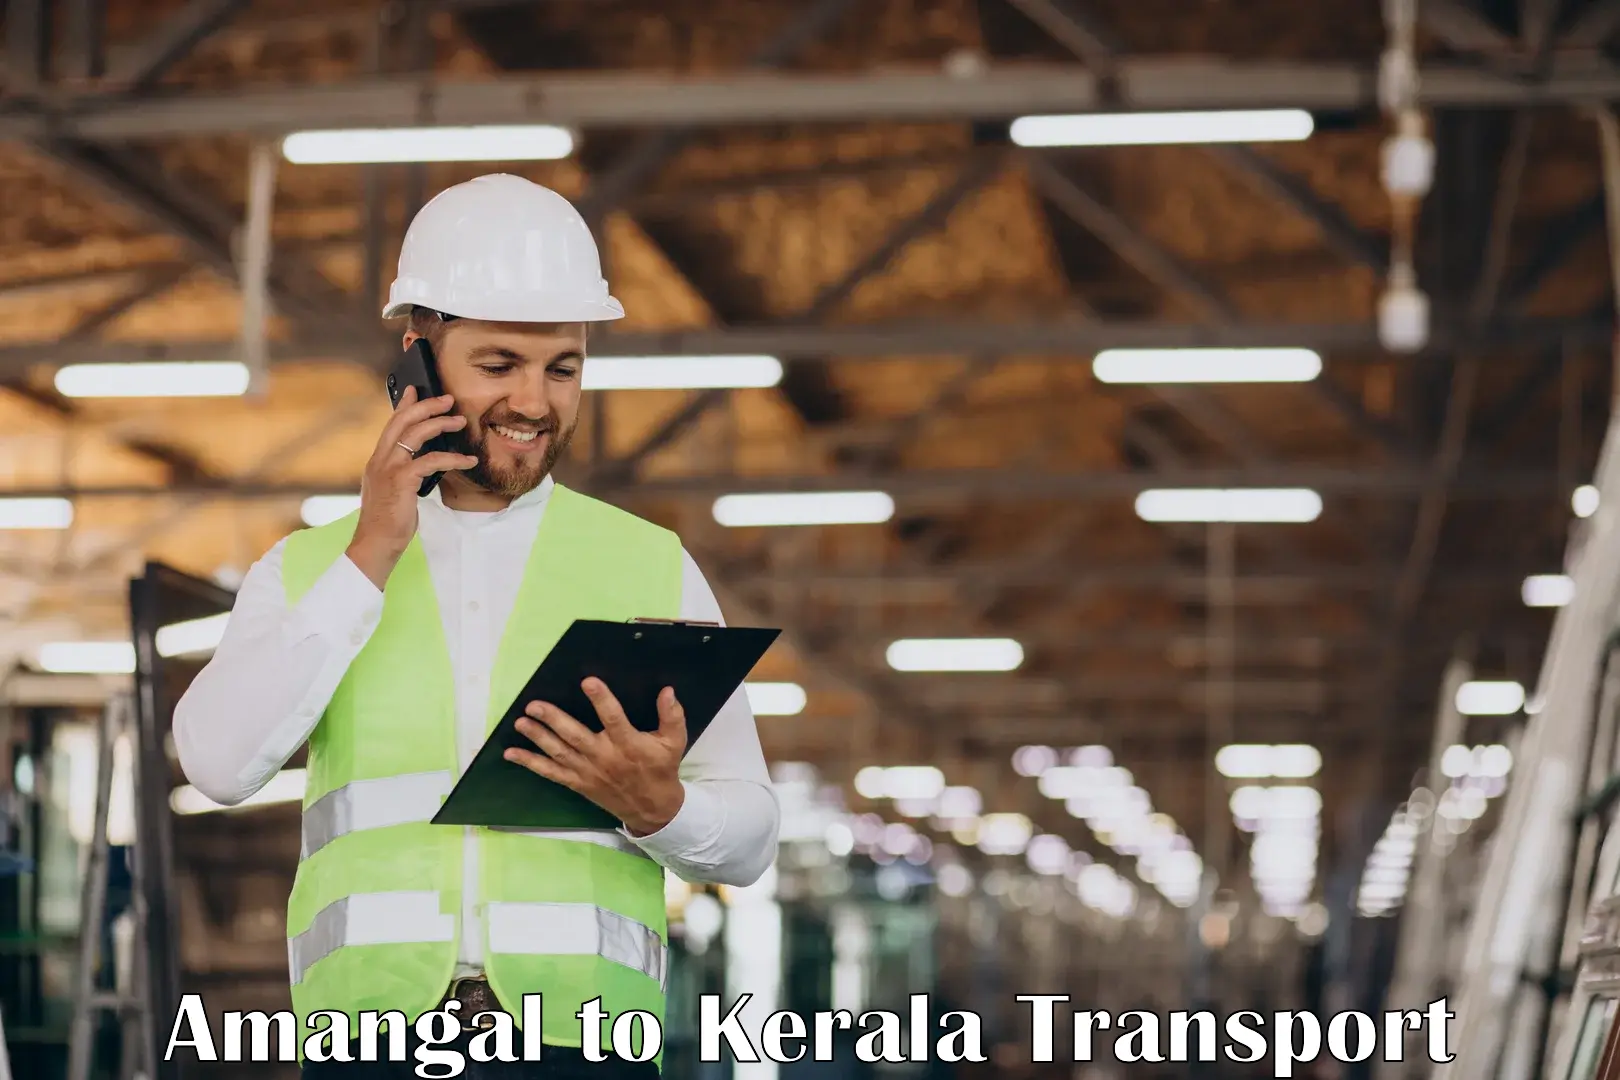 Truck transport companies in India Amangal to Kattappana